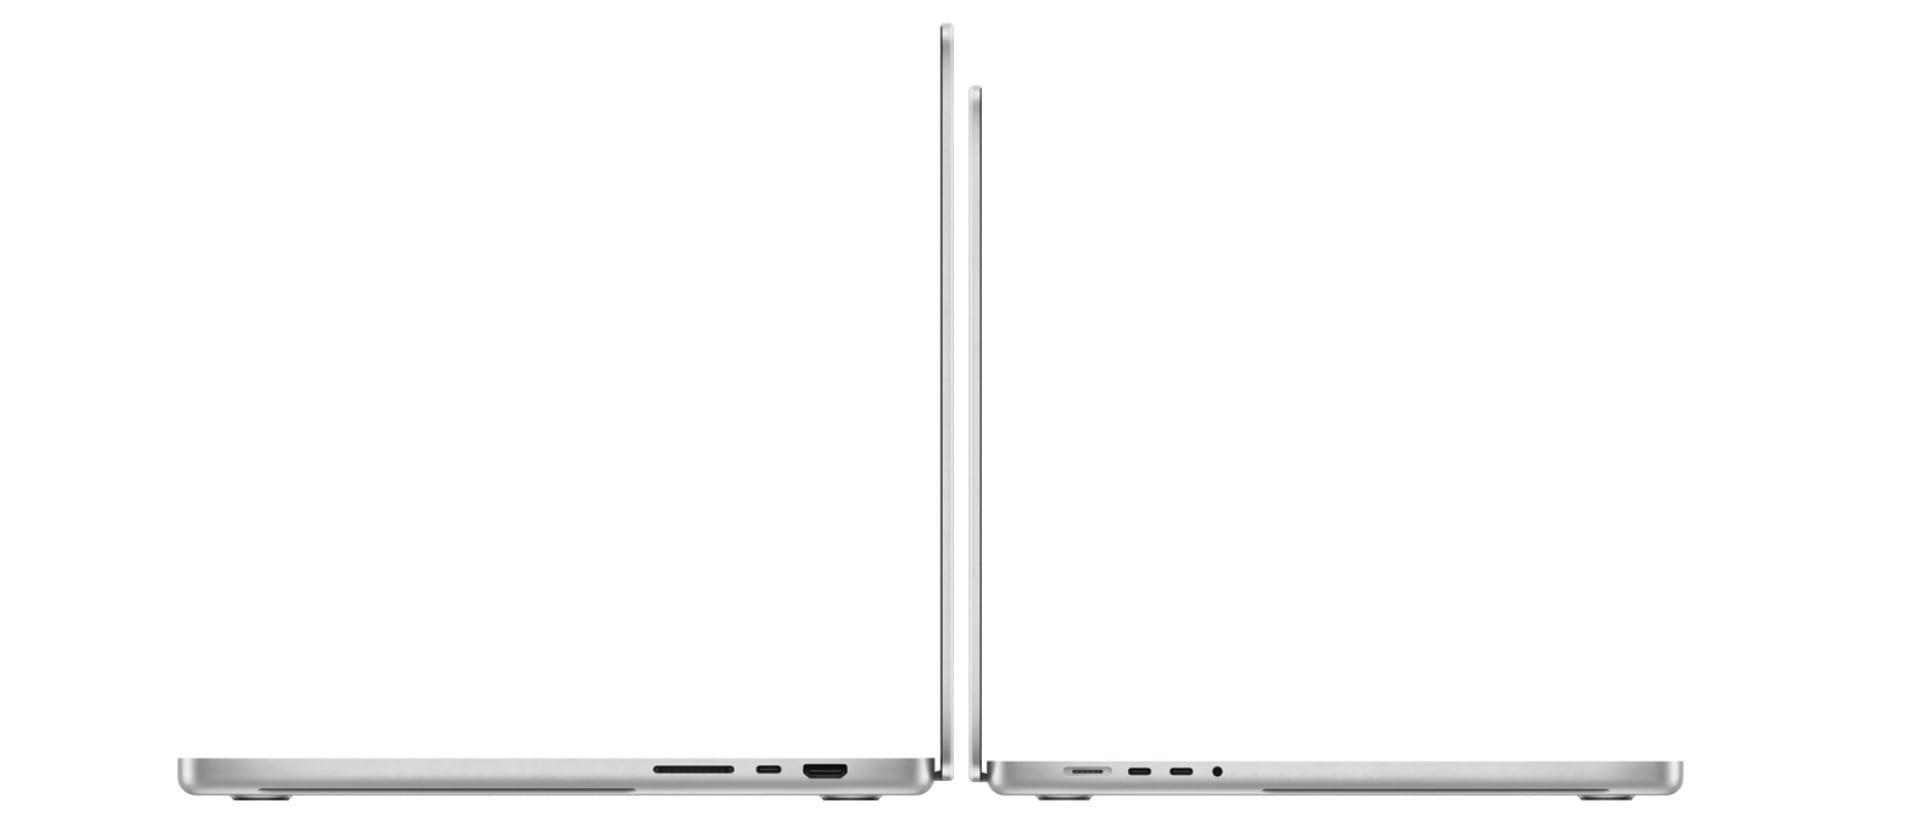 MacBook Pro 16inch vs 14inch